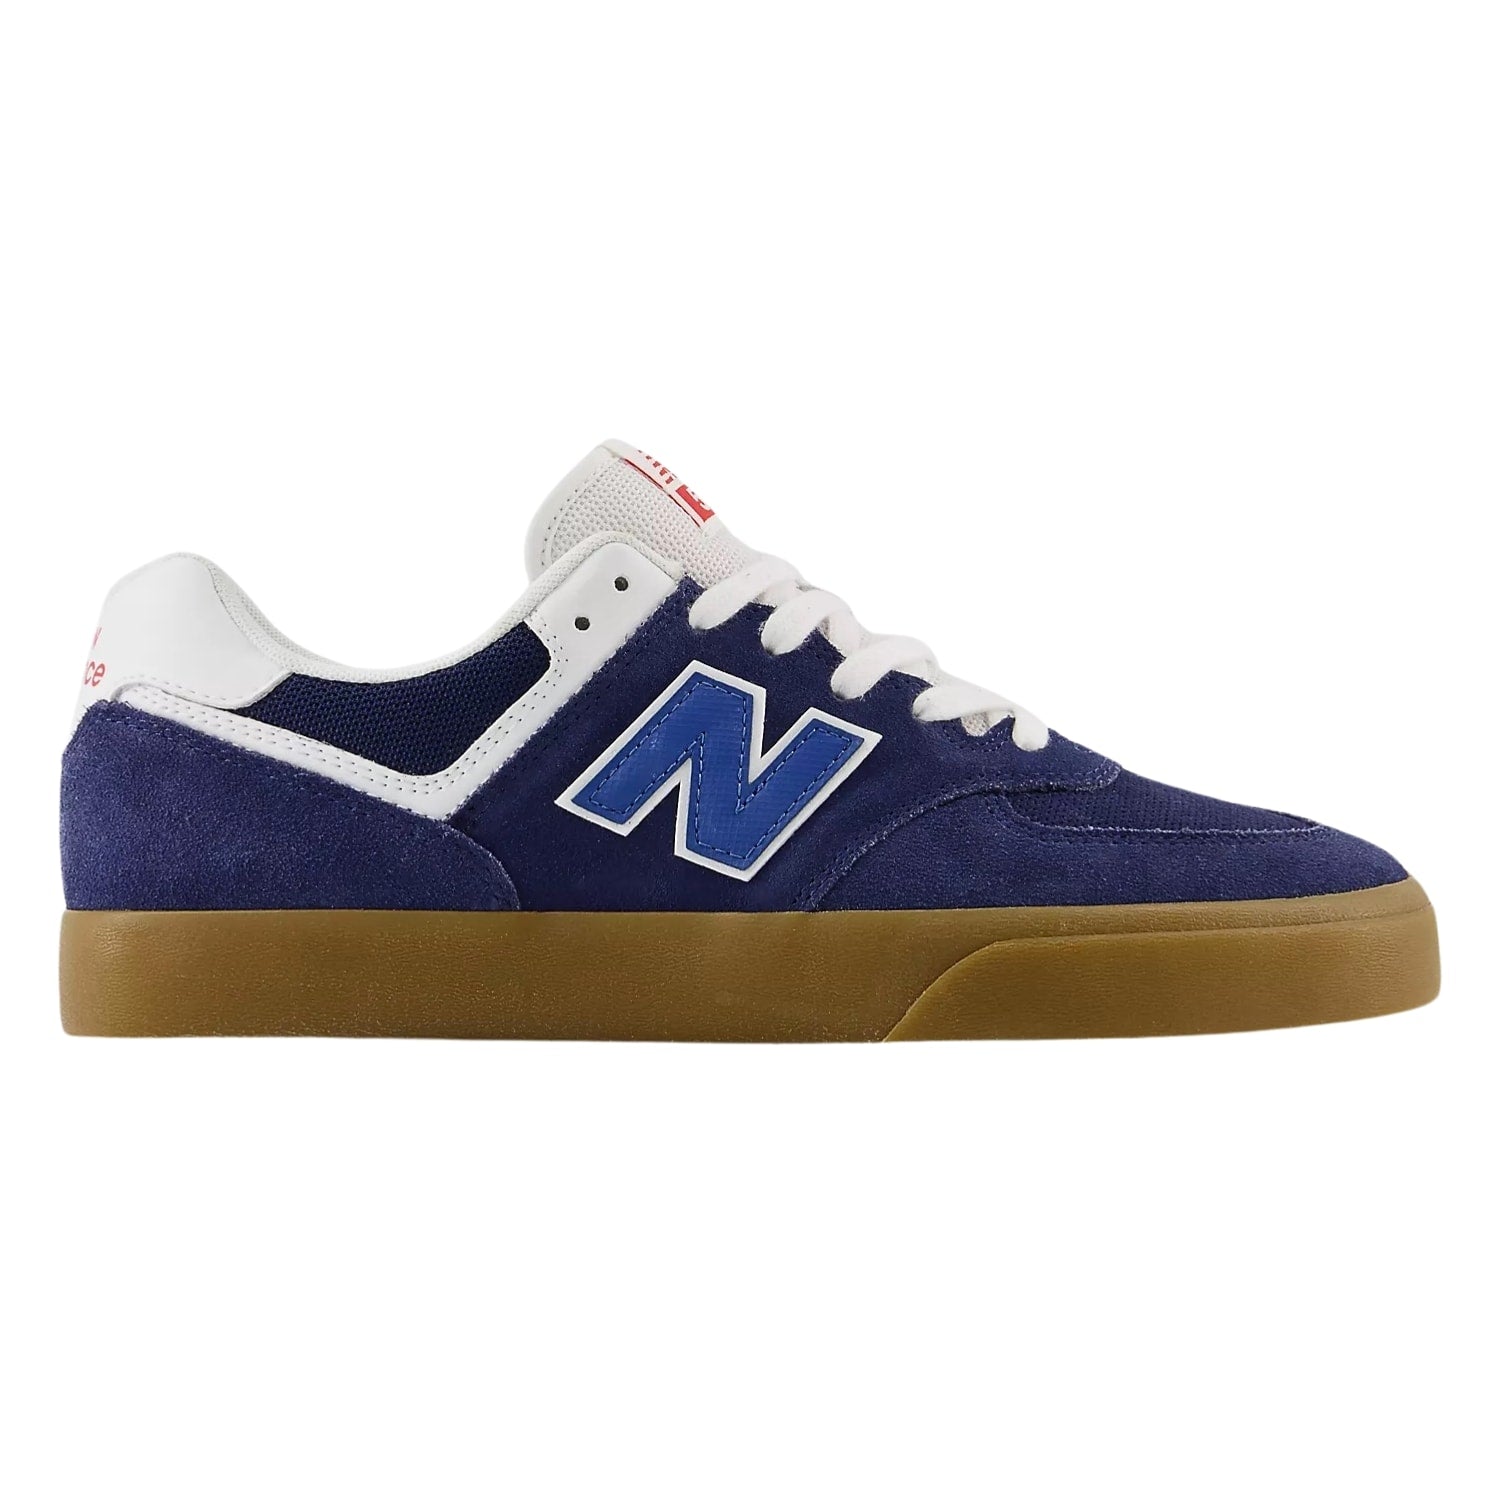 New Balance Numeric Nm574 Skate Shoes - Navy/White - Mens Skate Shoes by New Balance Numeric